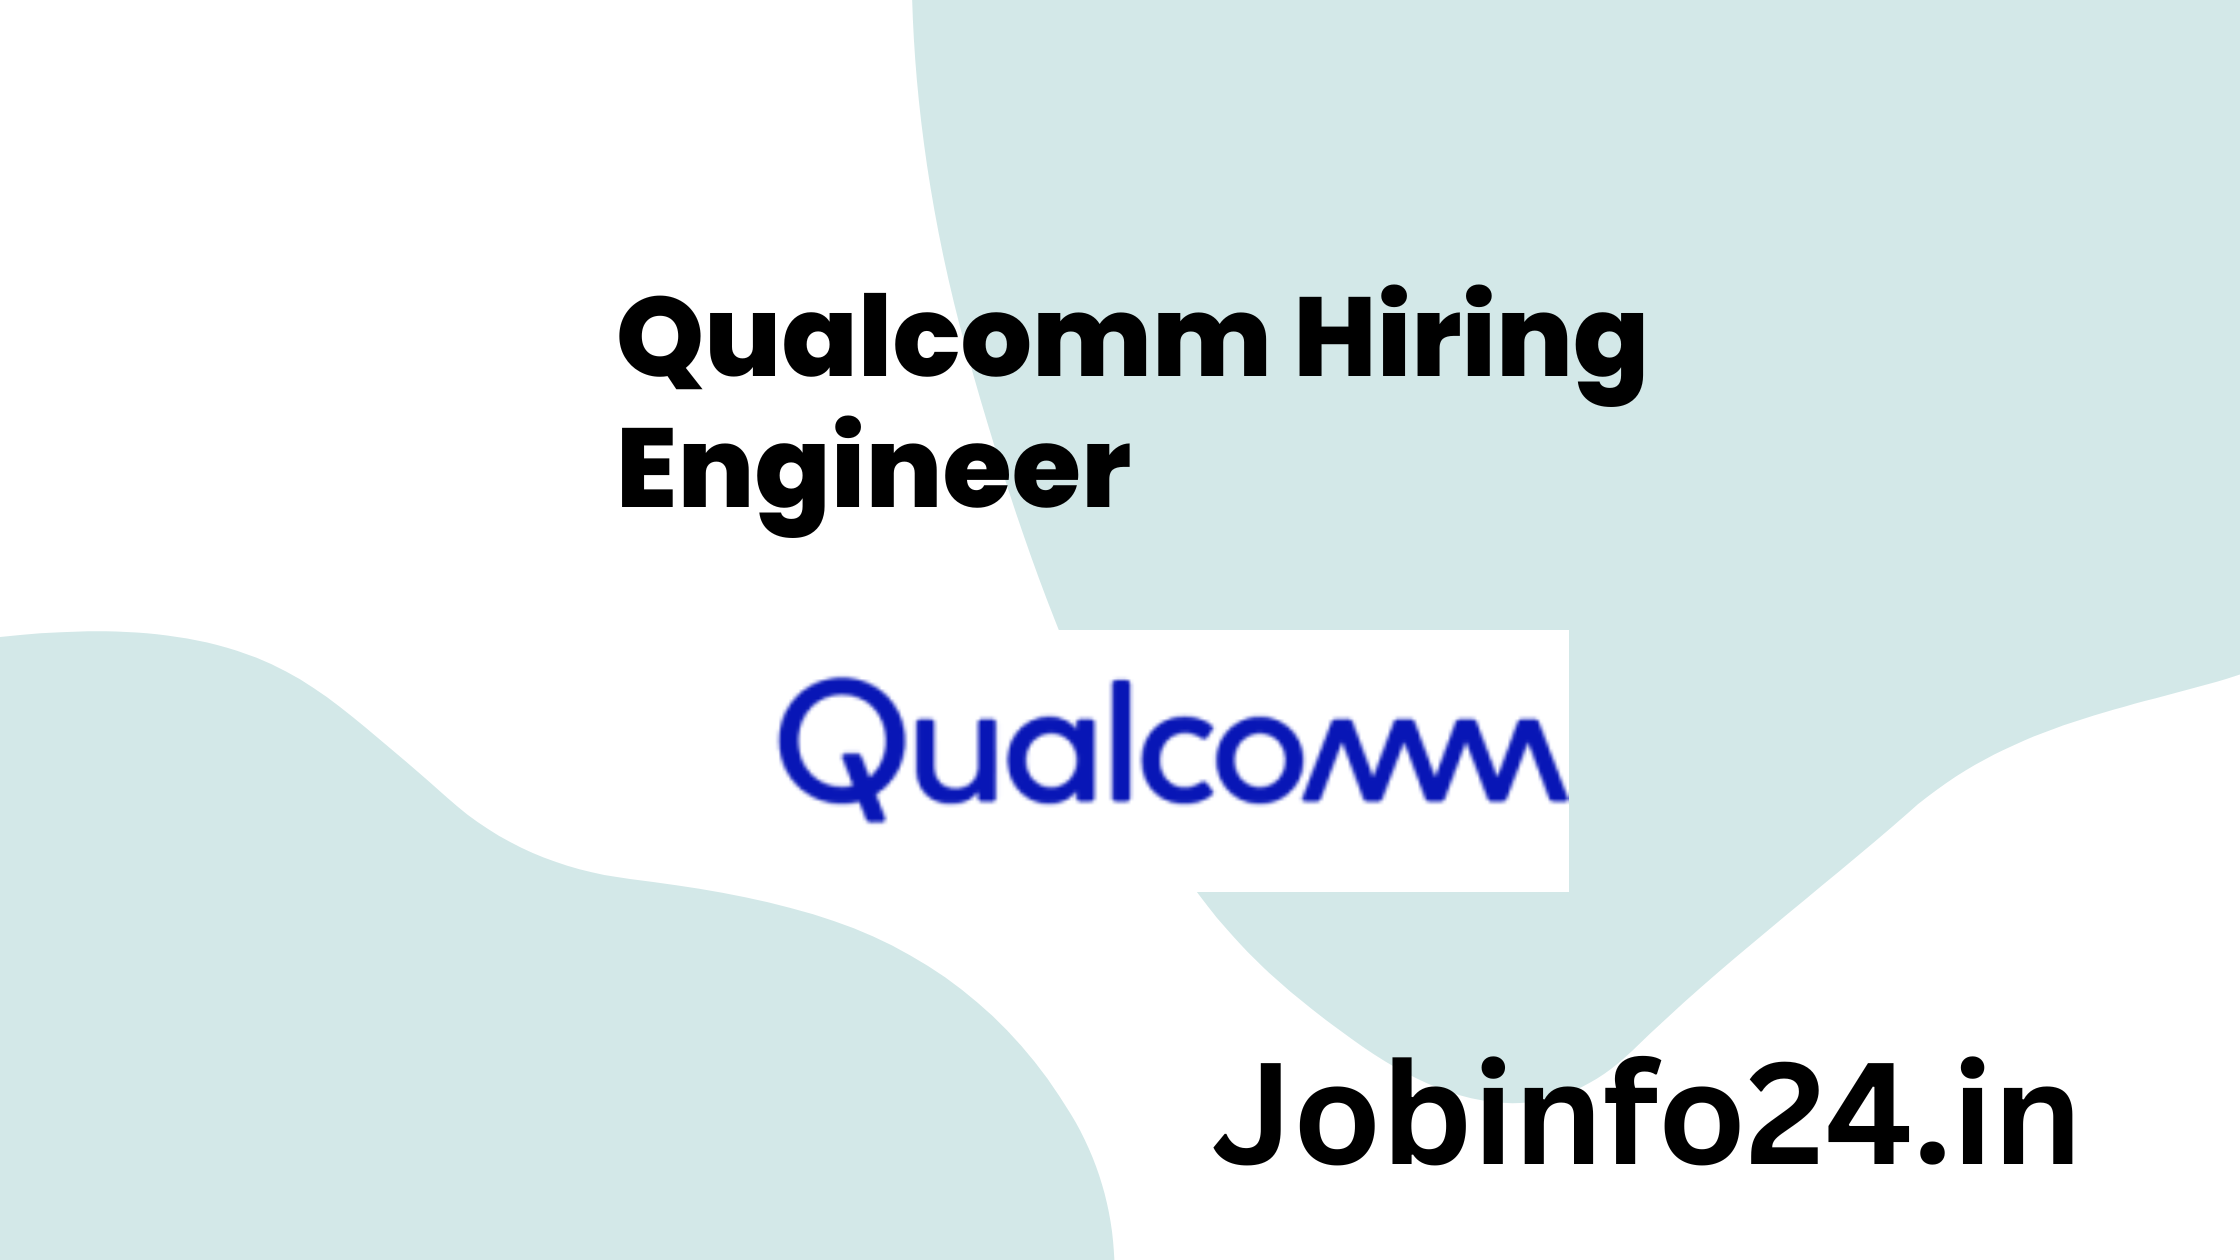 Qualcomm Hiring Engineer